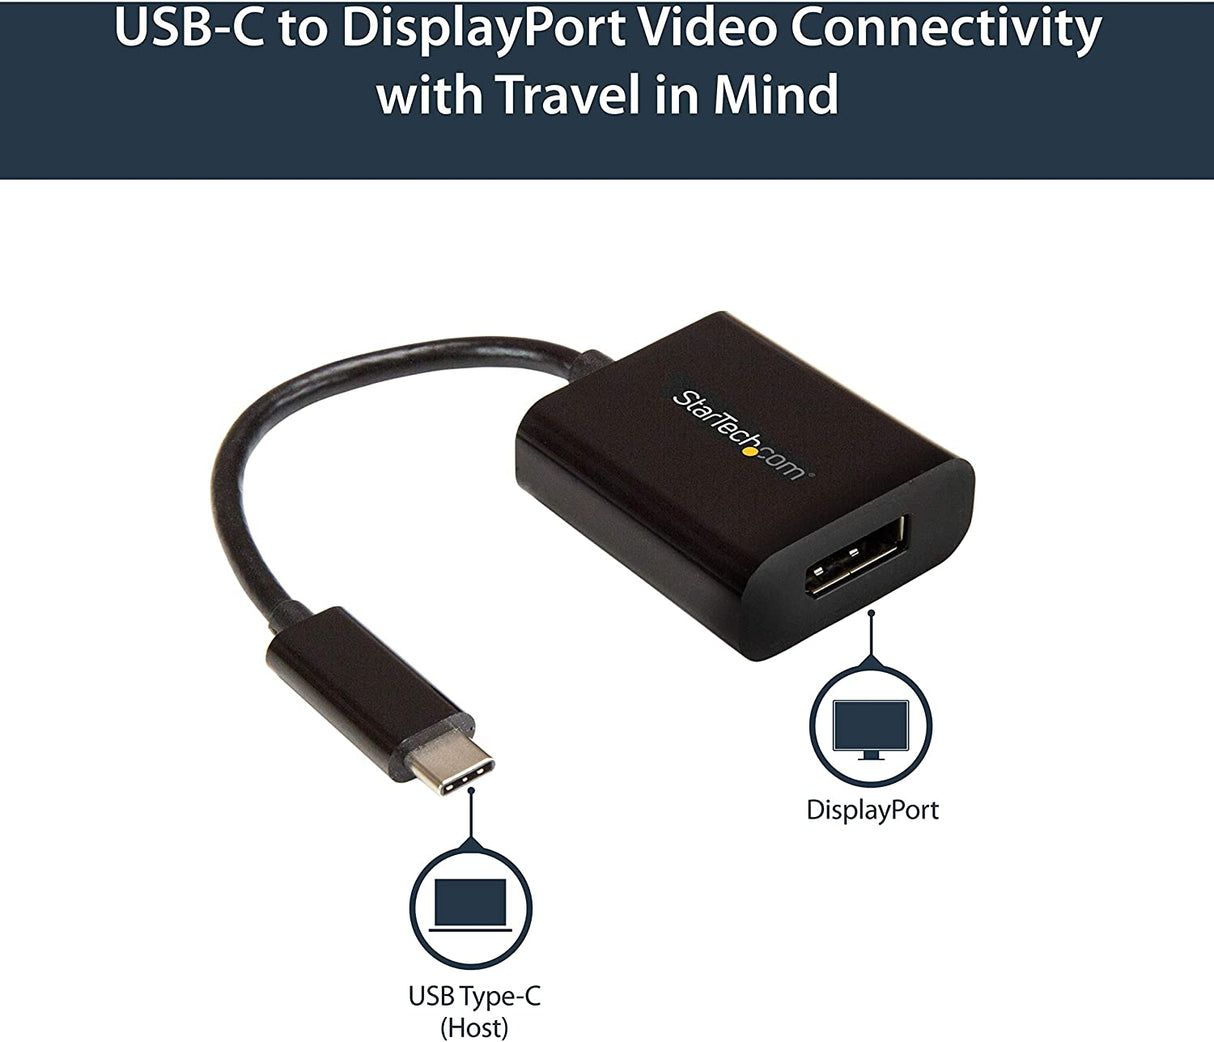 StarTech.com USB C to DisplayPort Adapter - 4K 60Hz/8K 30Hz, USB Type-C DP 1.4 HBR2 Dongle, Compact USB-C (DP Alt Mode) Monitor Video Converter, Works w/ TB3 - New Version Available CDP2DPEC (CDP2DP) Black